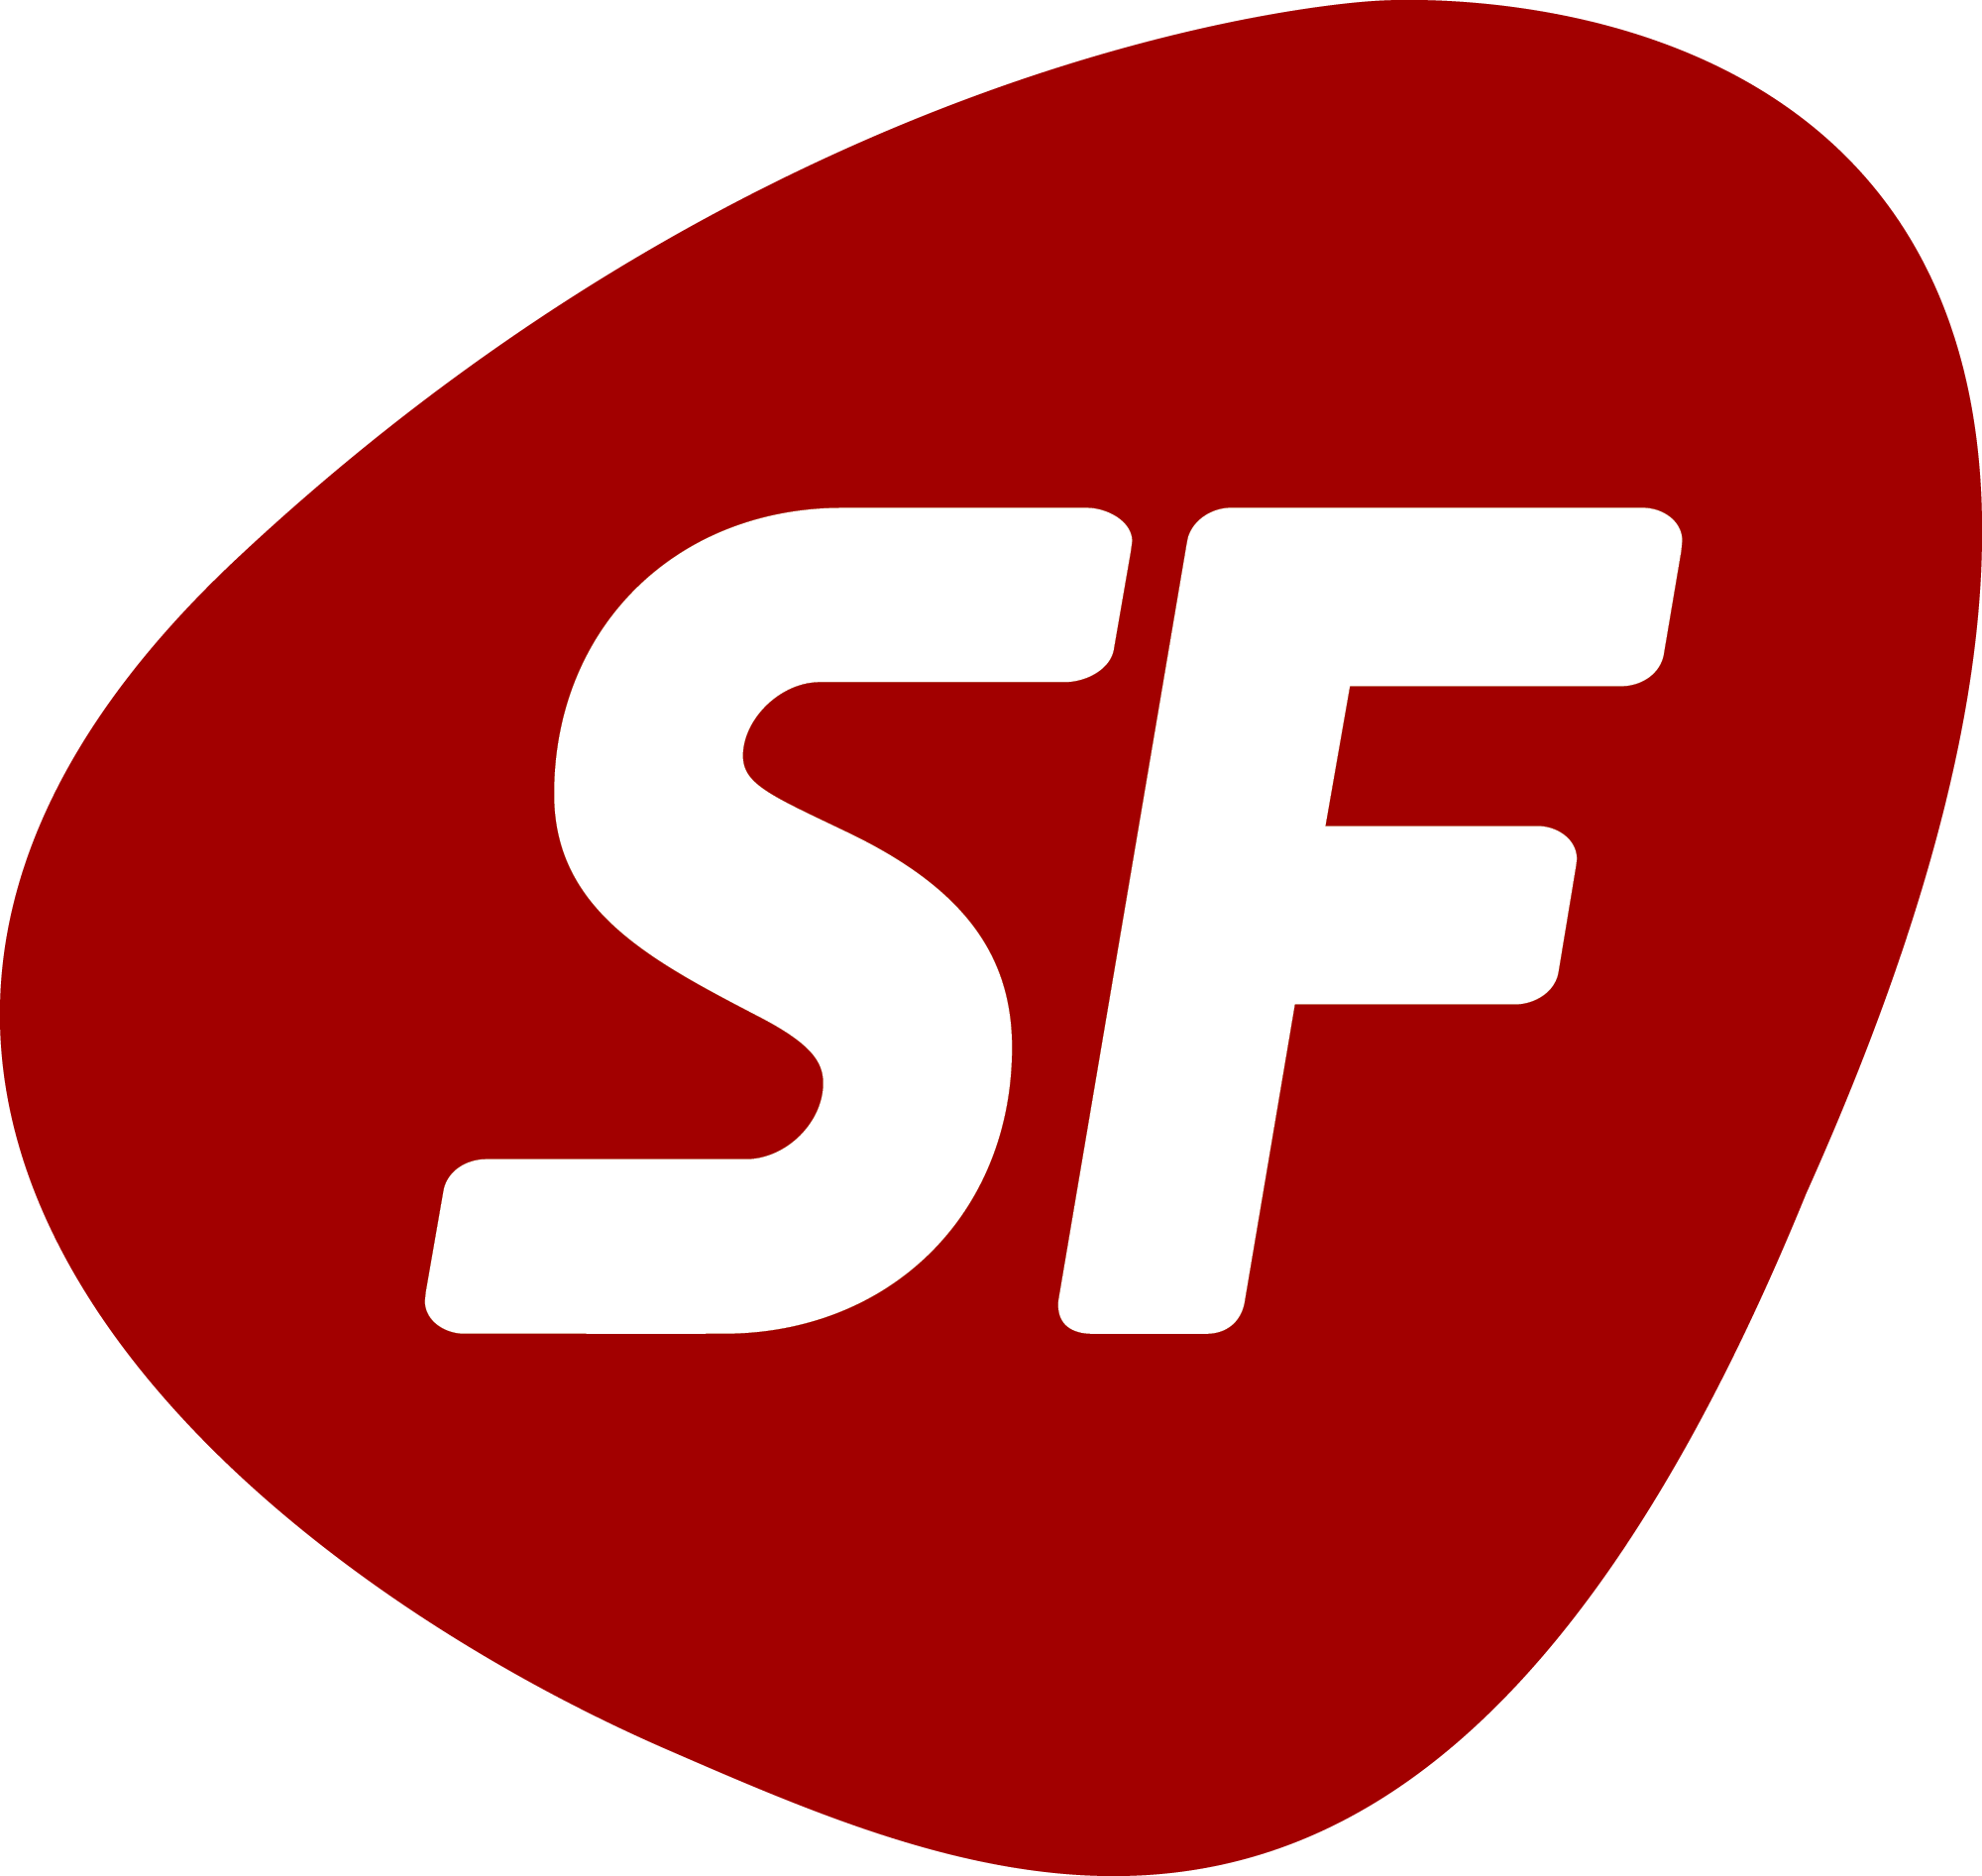 SF Logo - SF logo 100 100 20.png